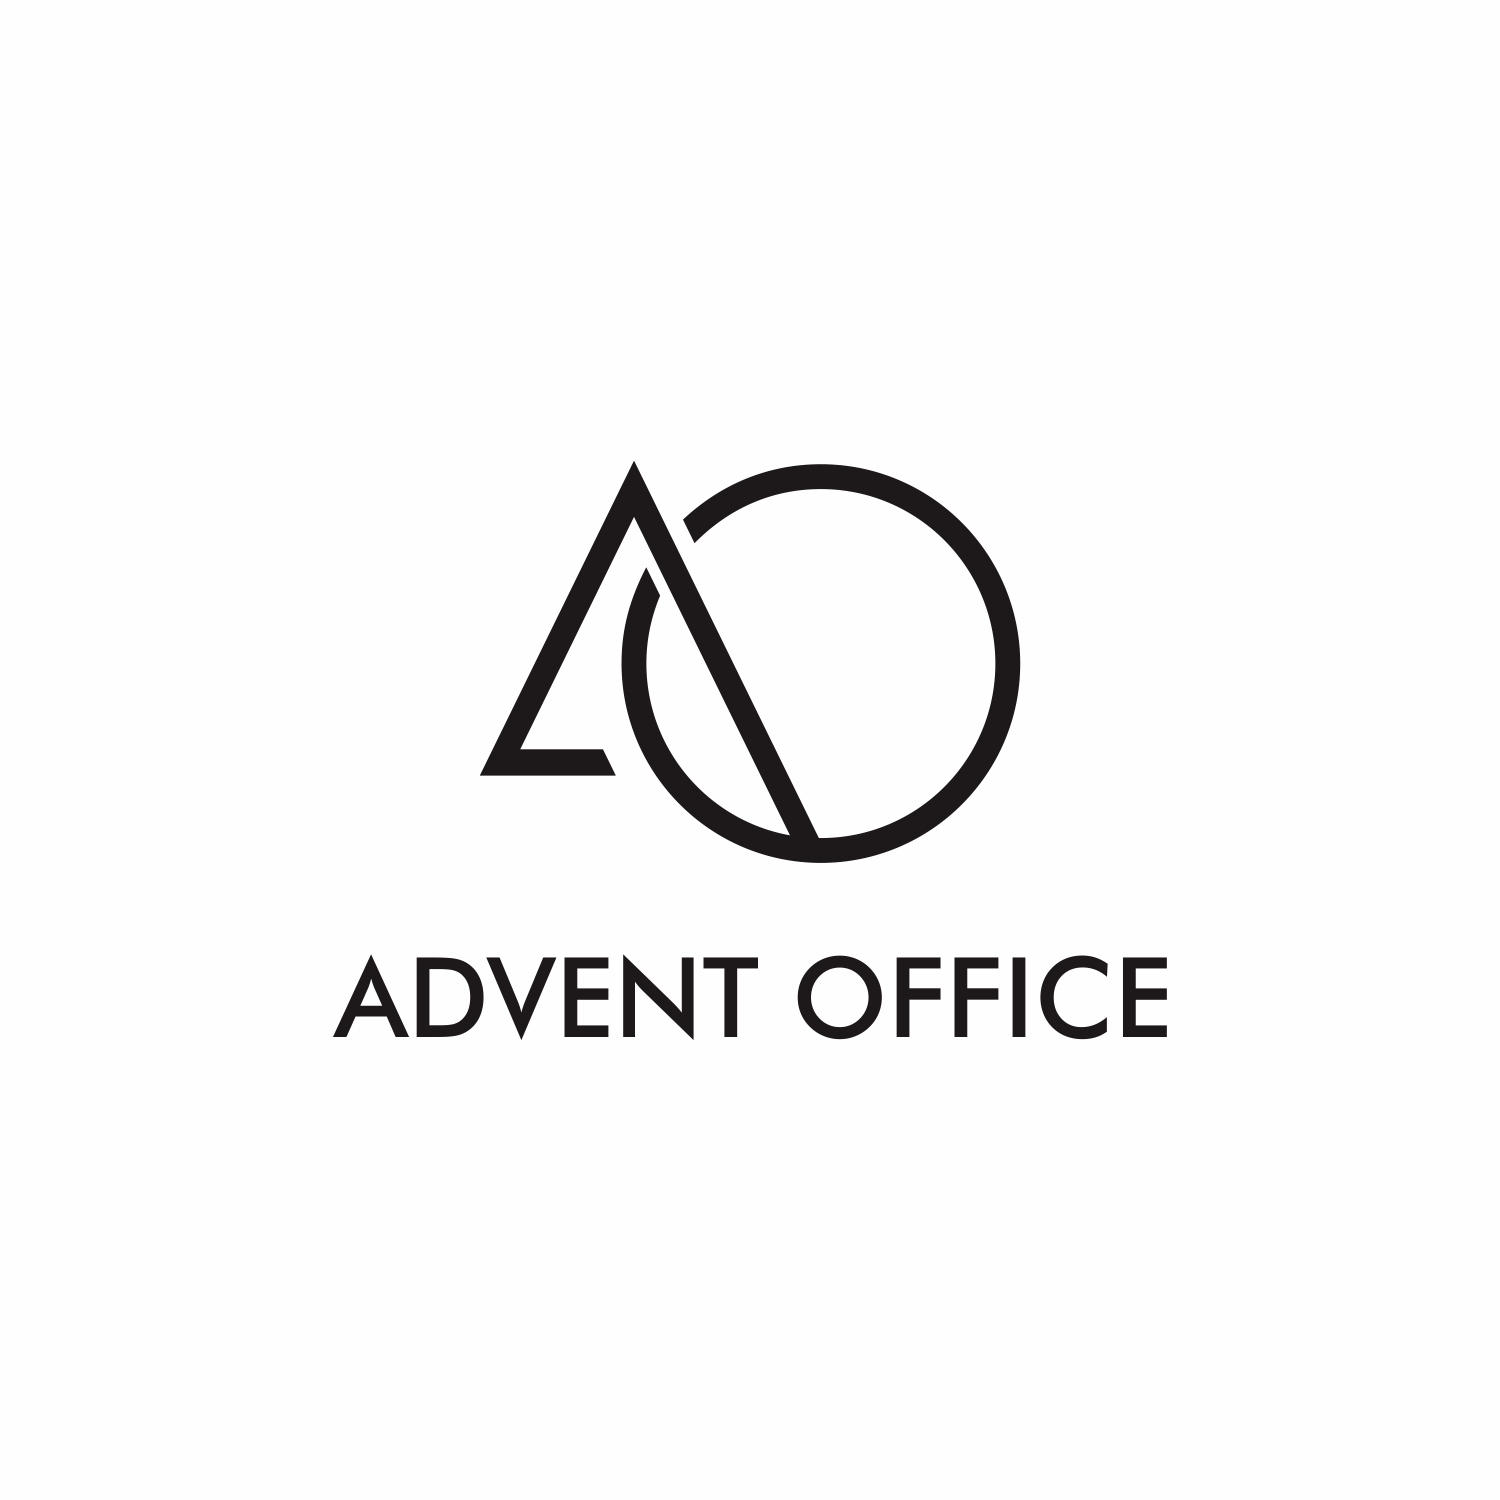 Ao Logo - Modern, Professional, It Company Logo Design for A.O. ADVENT OFFICE ...